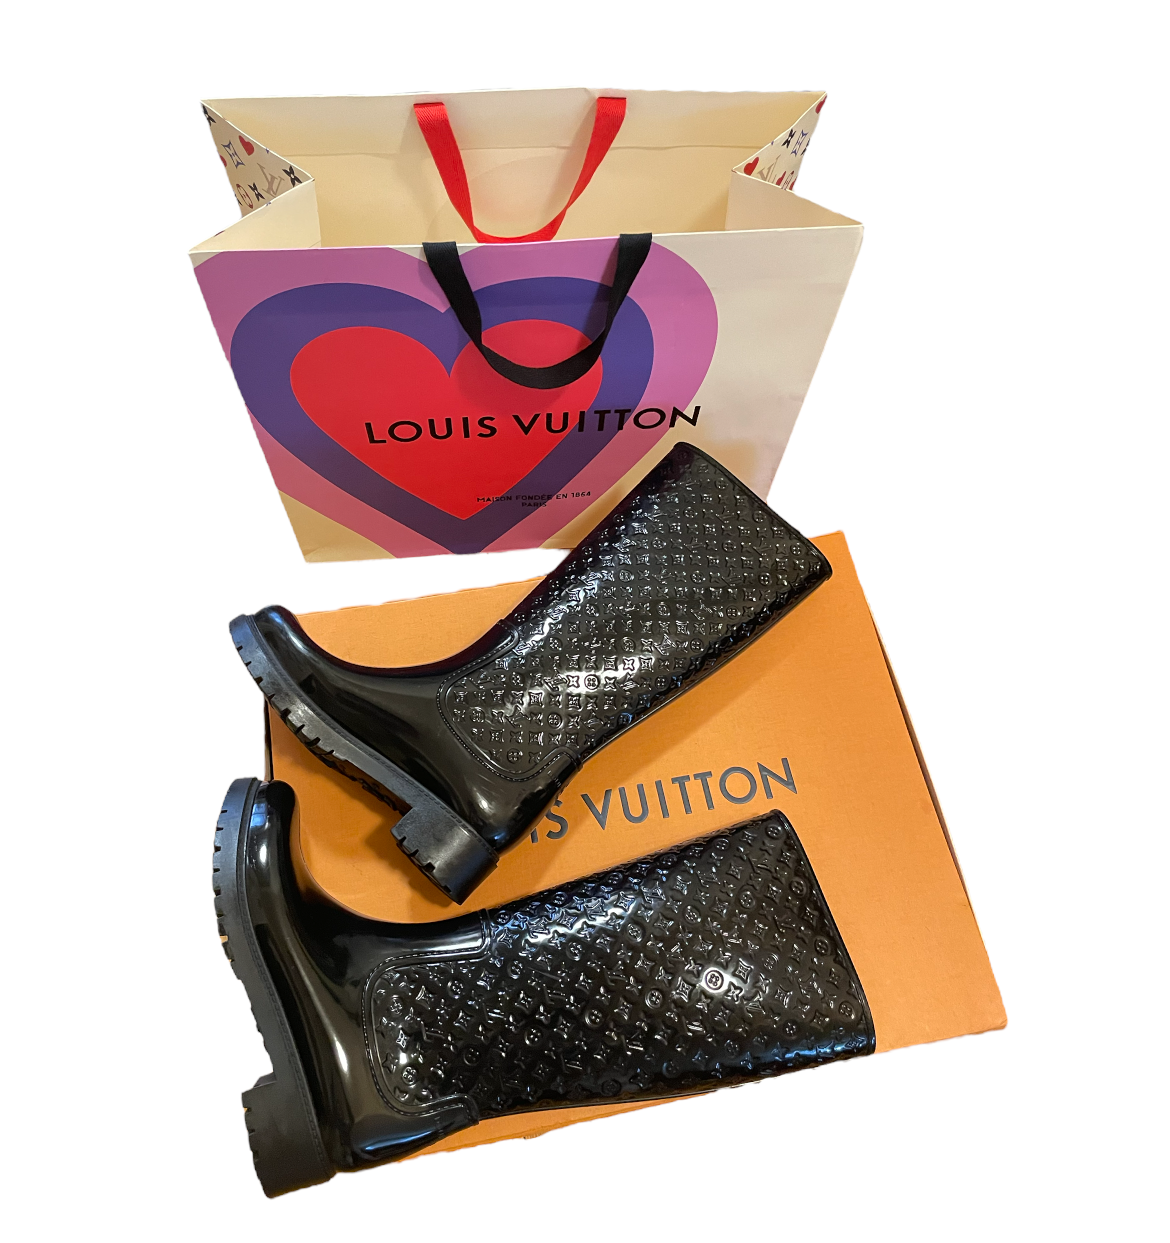 Louis Vuitton Women Black Rubber Rainboots Tall Wellington Boots